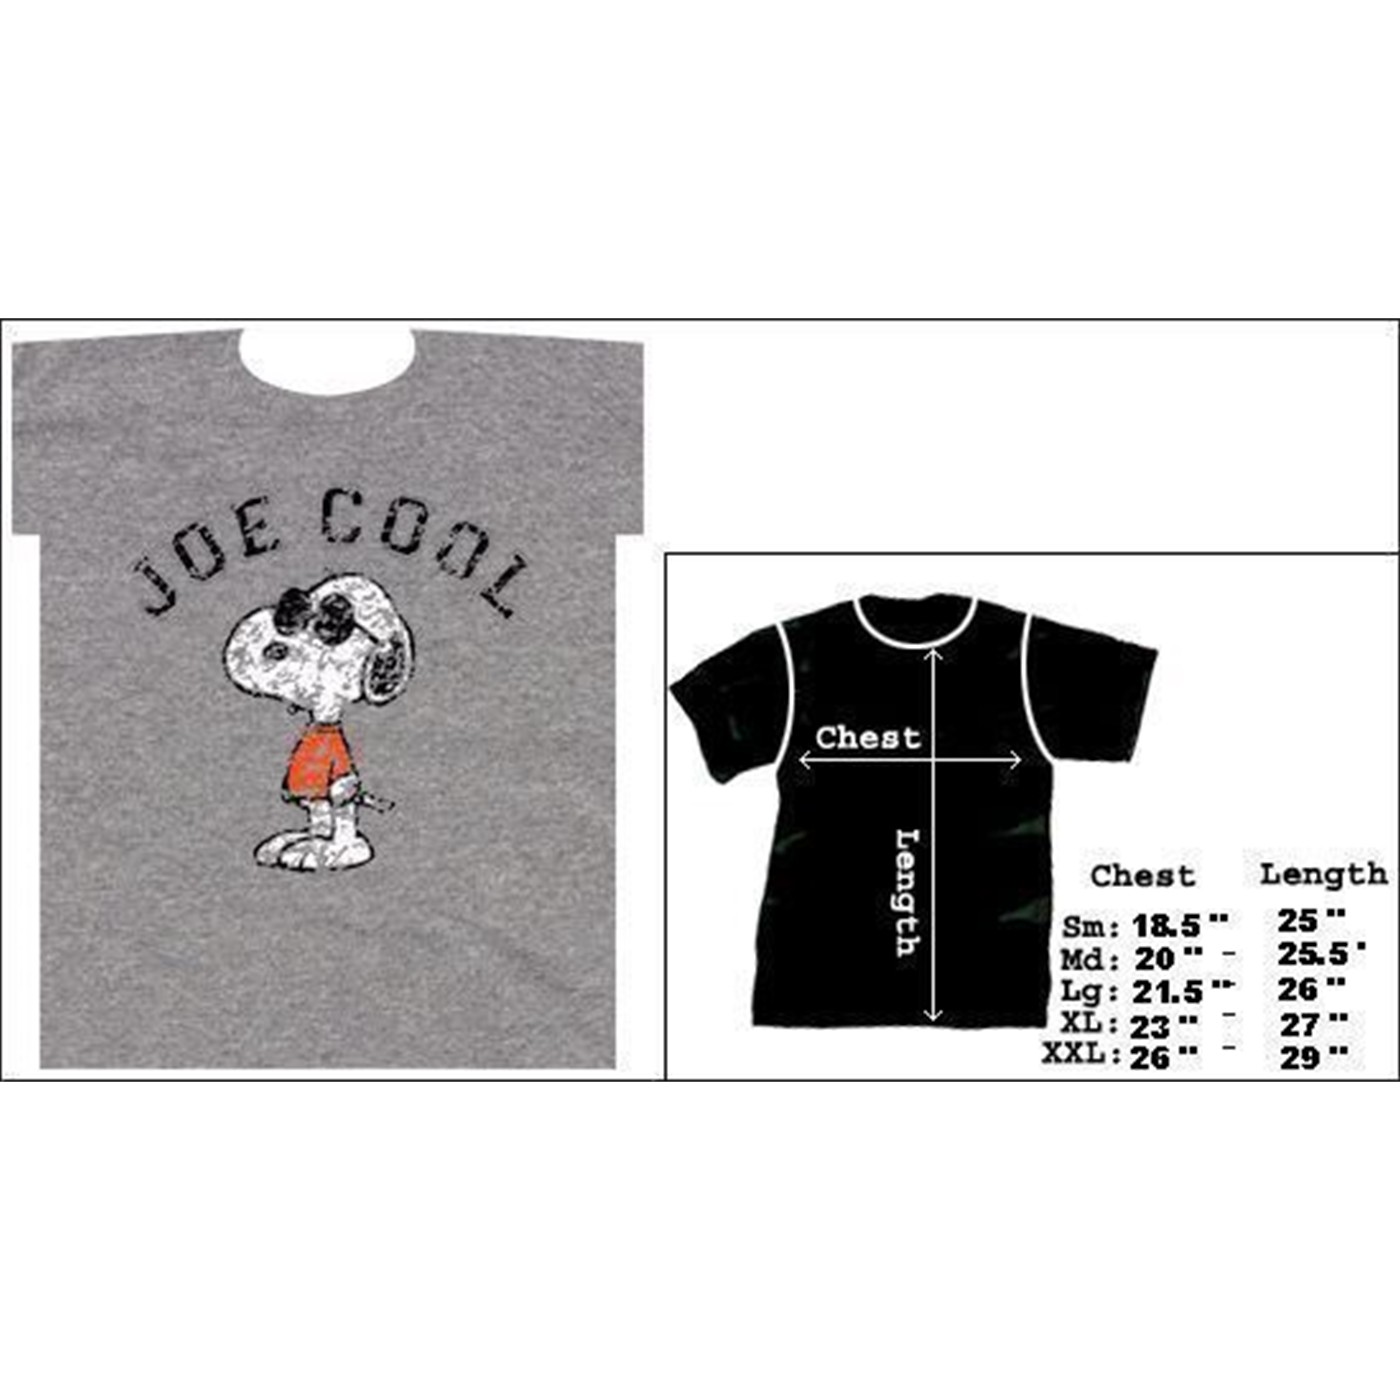 Snoopy Joe Cool tshirt